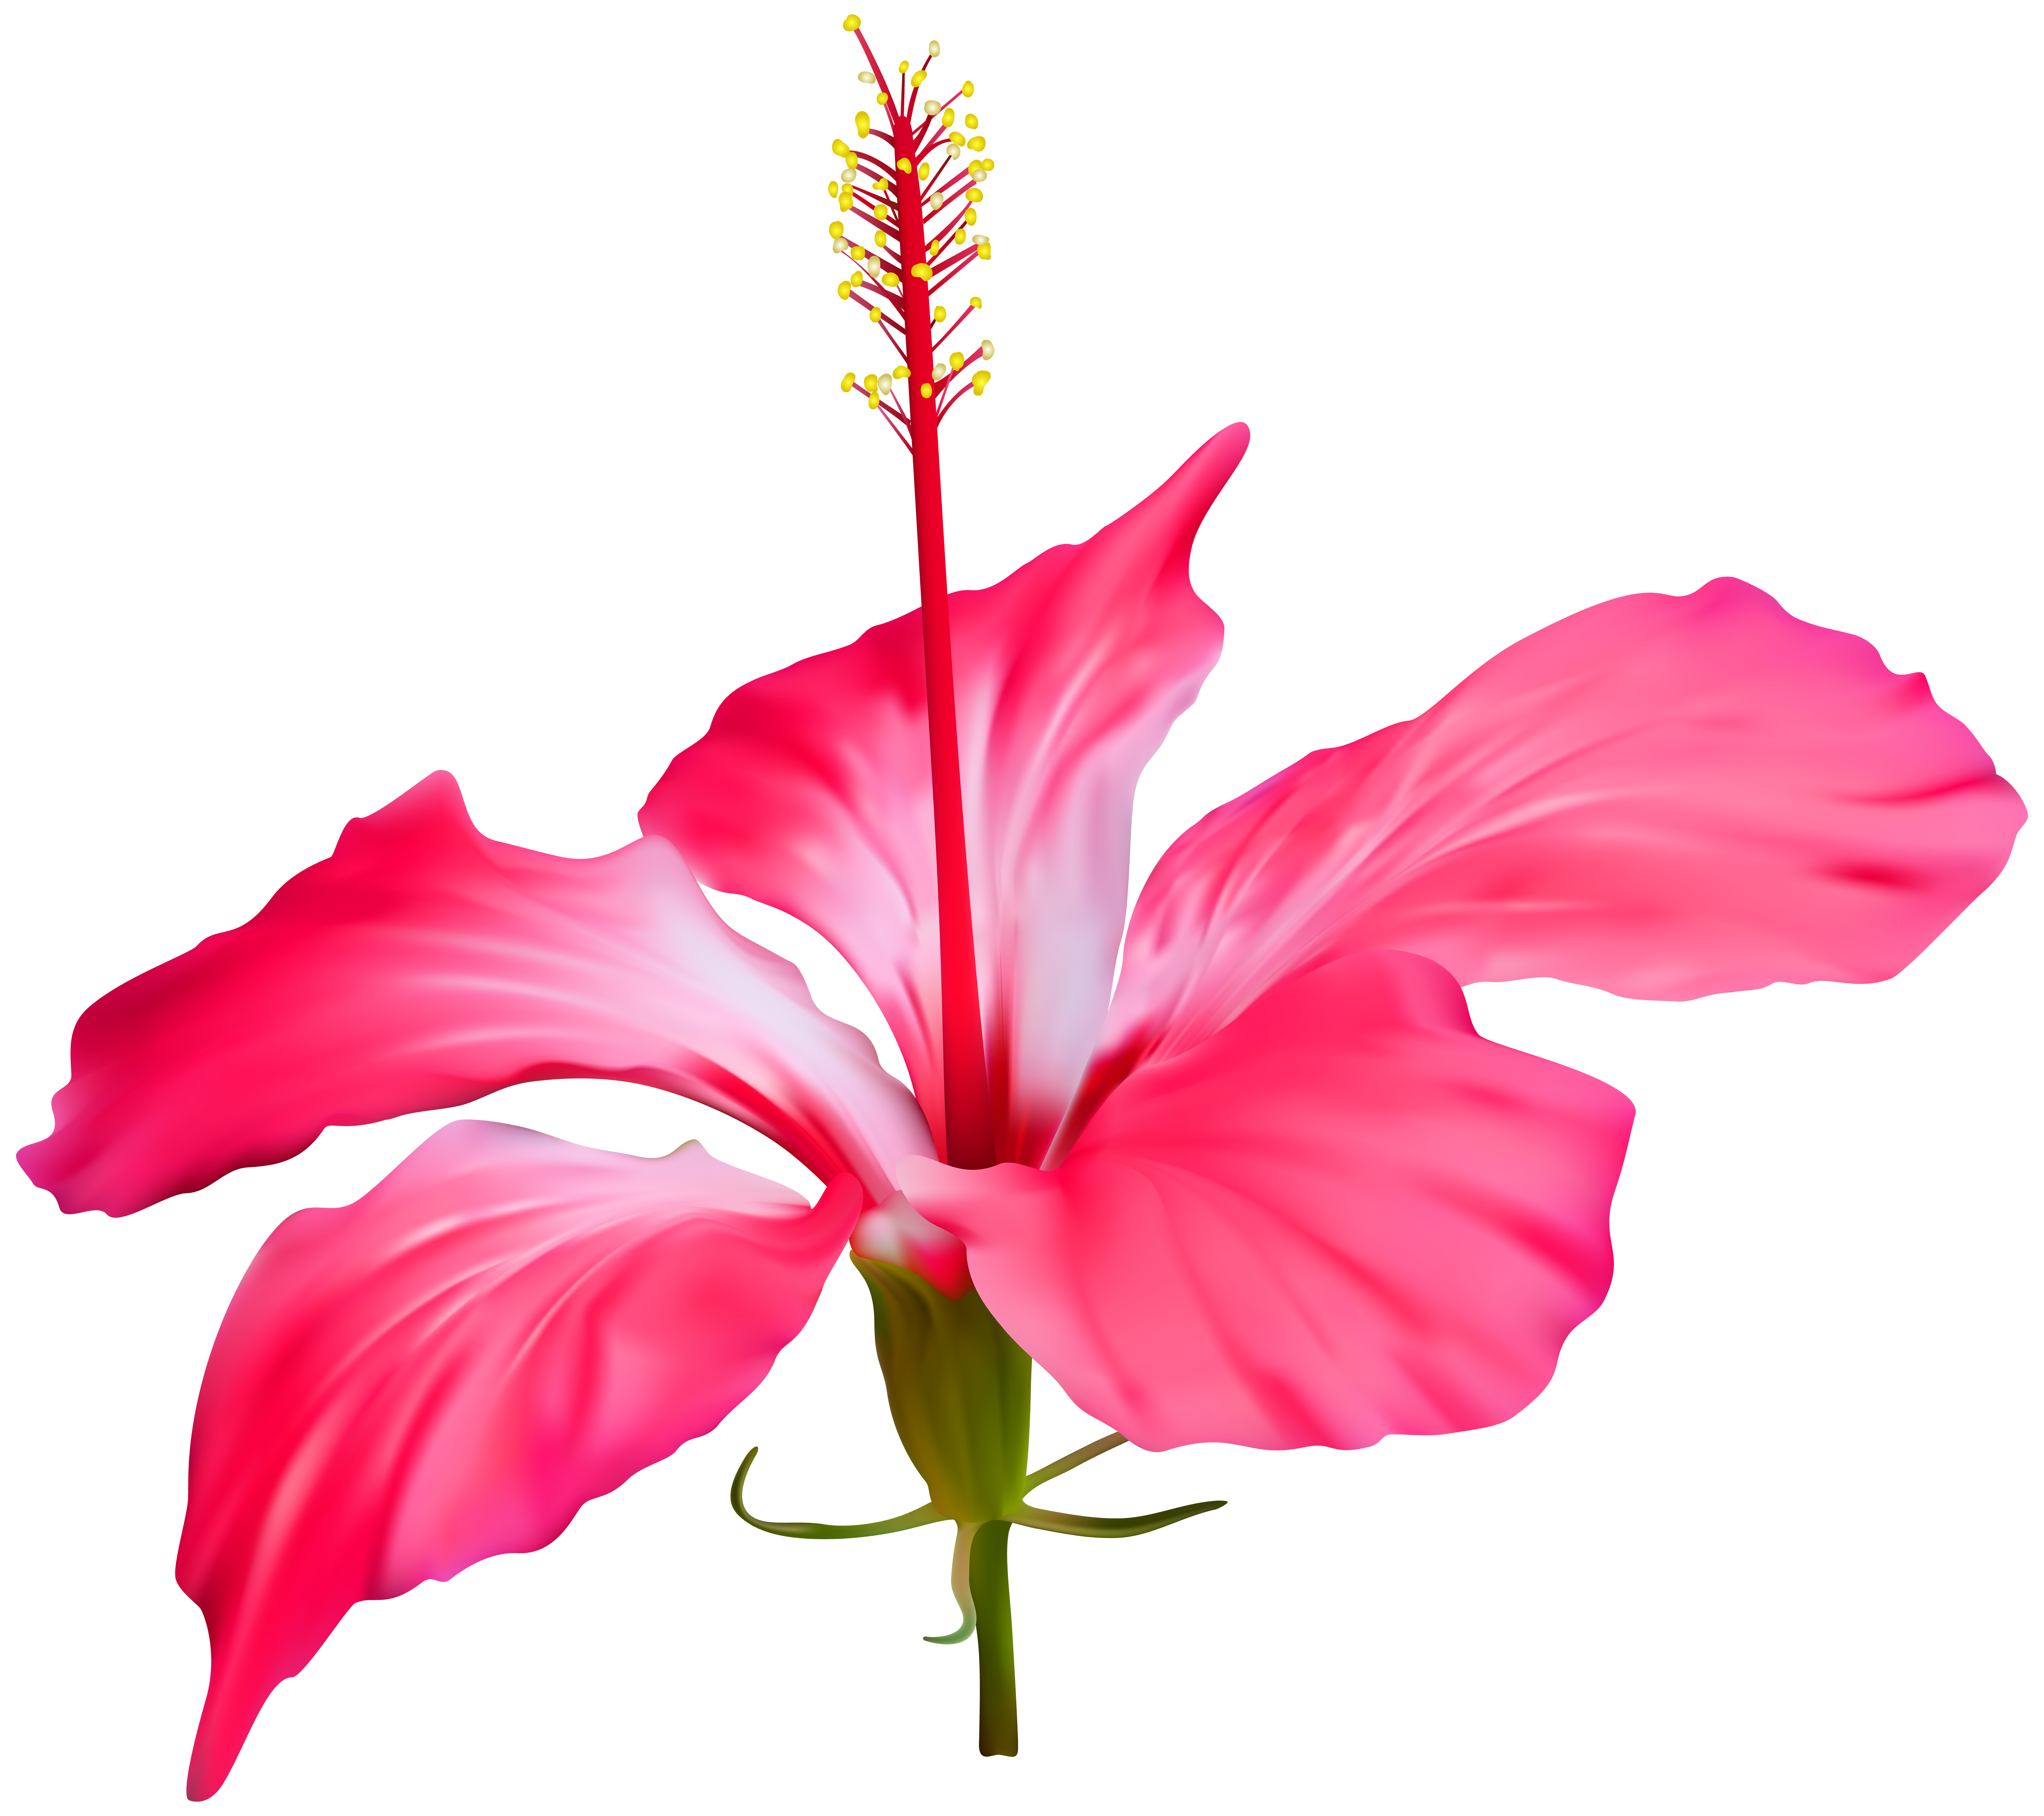 Hibiscus Flower Transparent PNG Clip Art